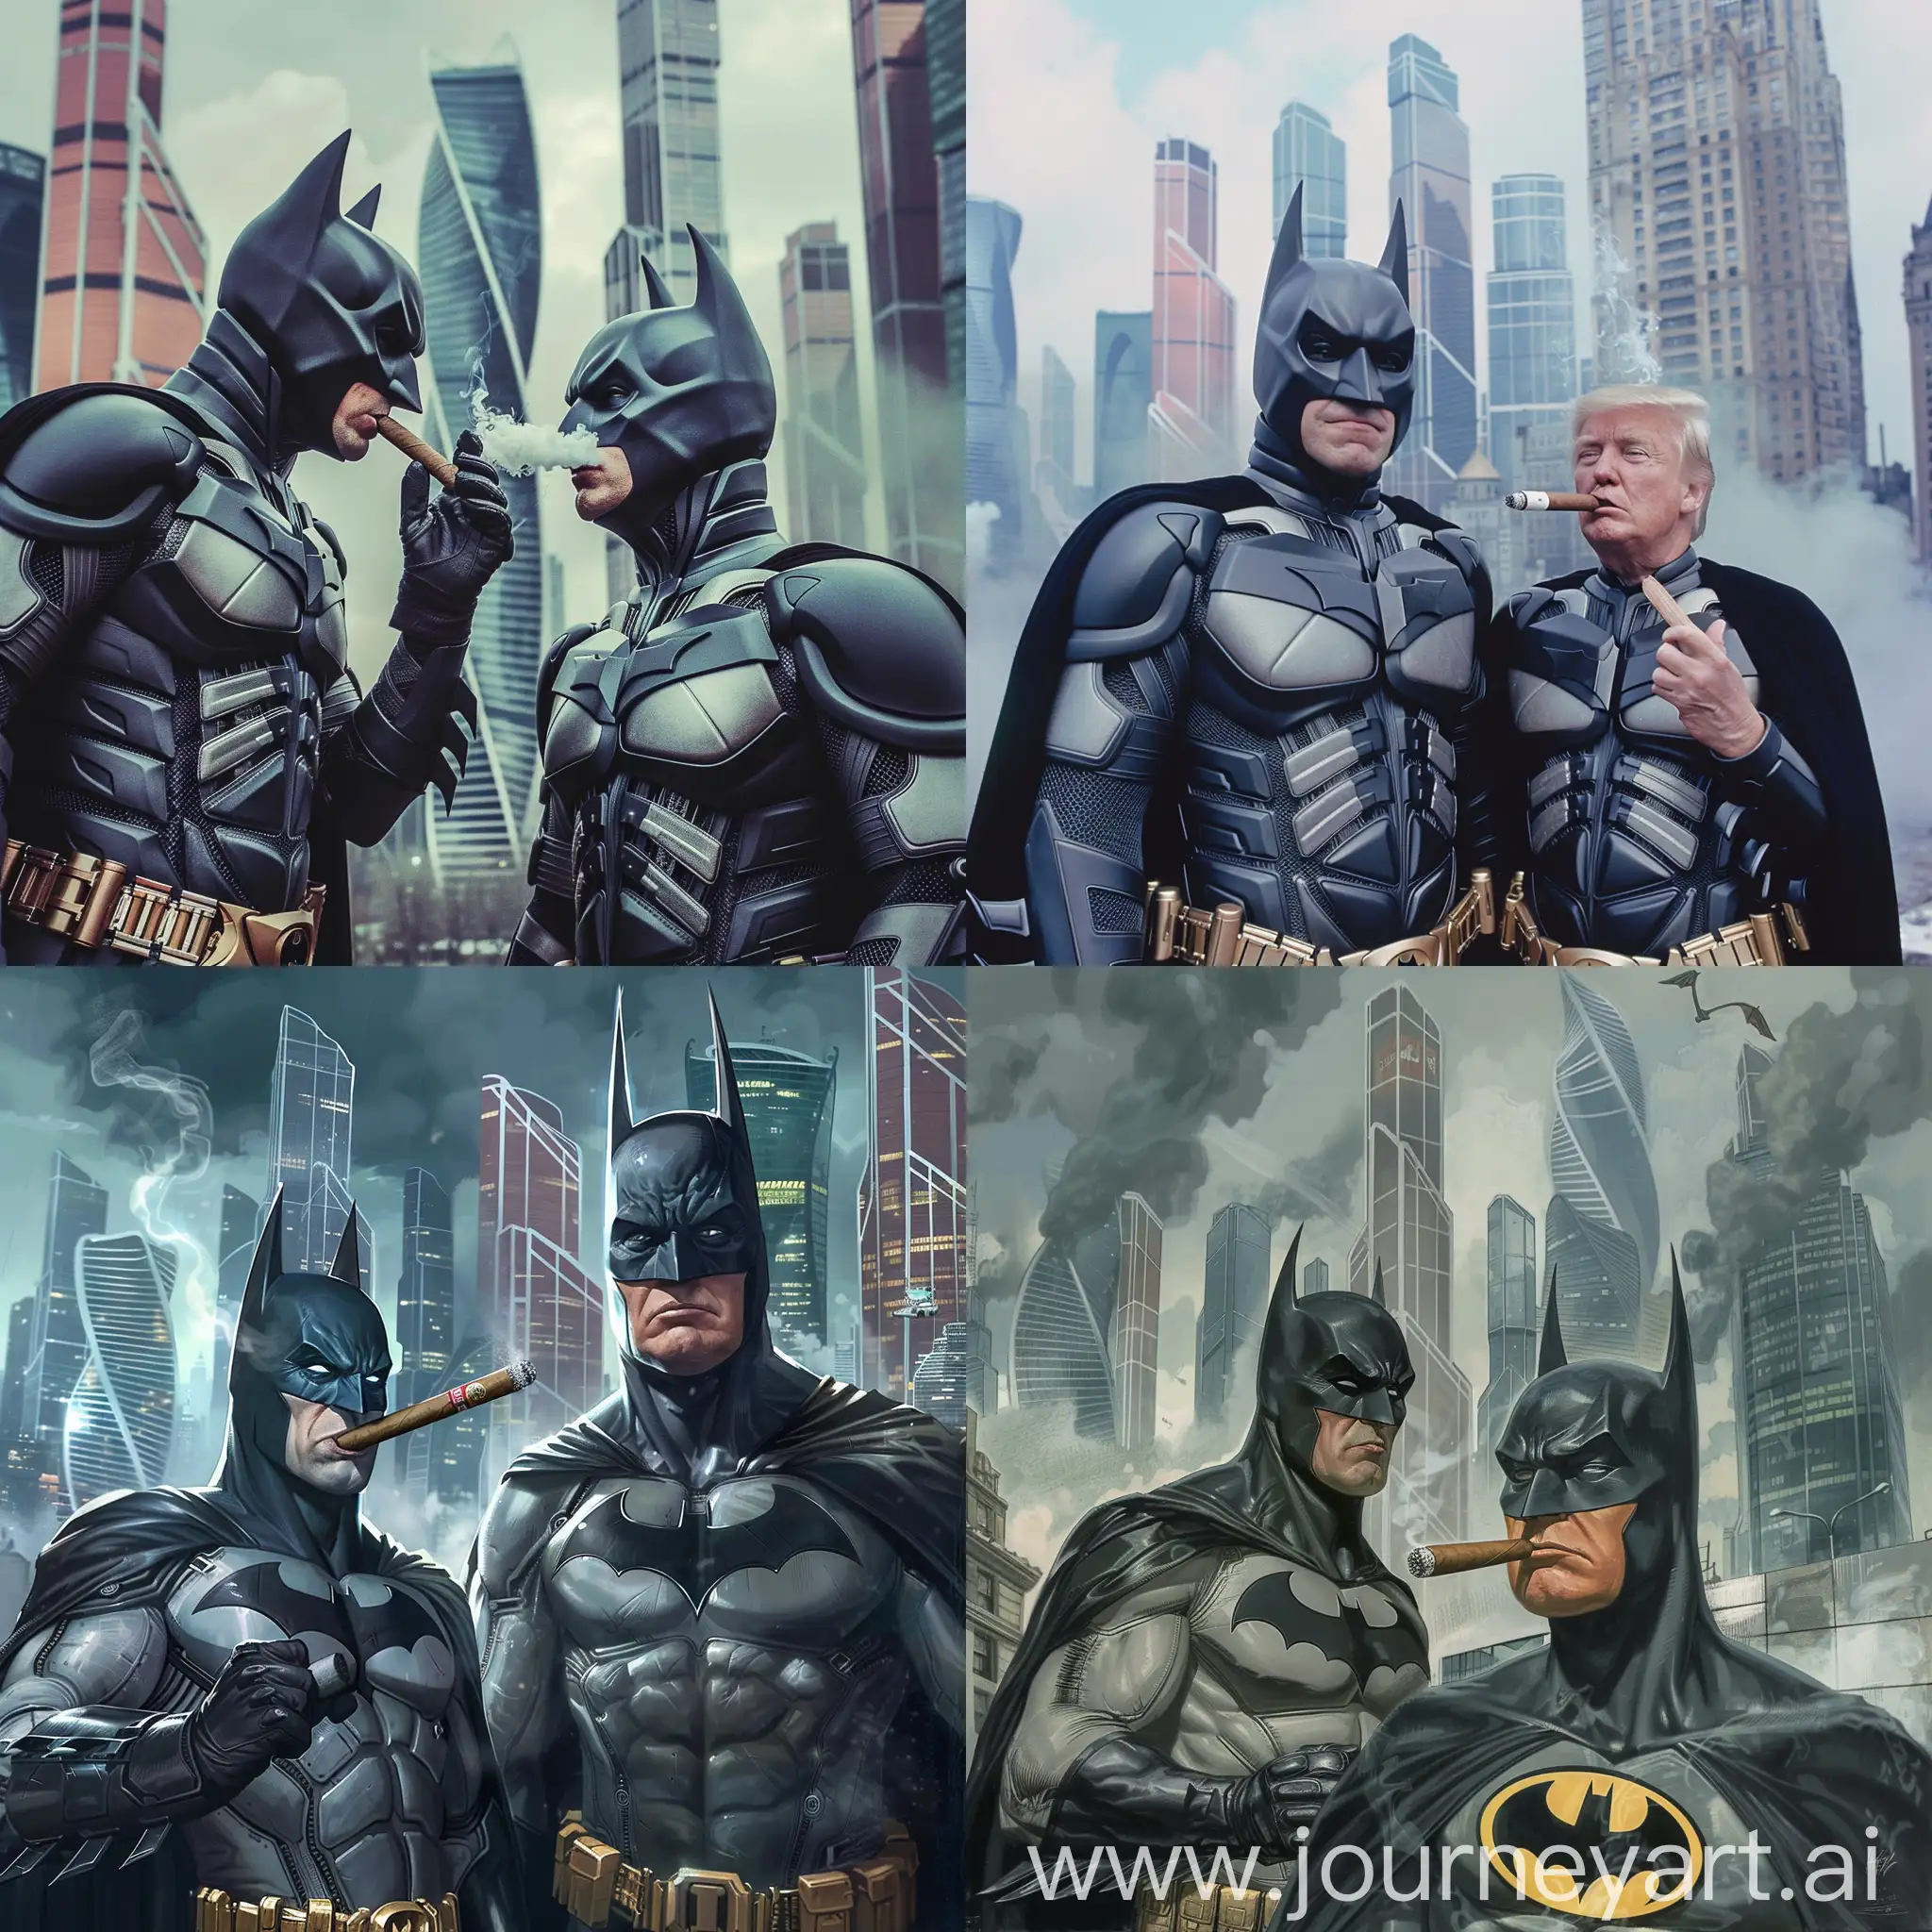 Batman-and-Donald-Trump-Smoking-Cigars-Amid-Moscow-Skyscrapers